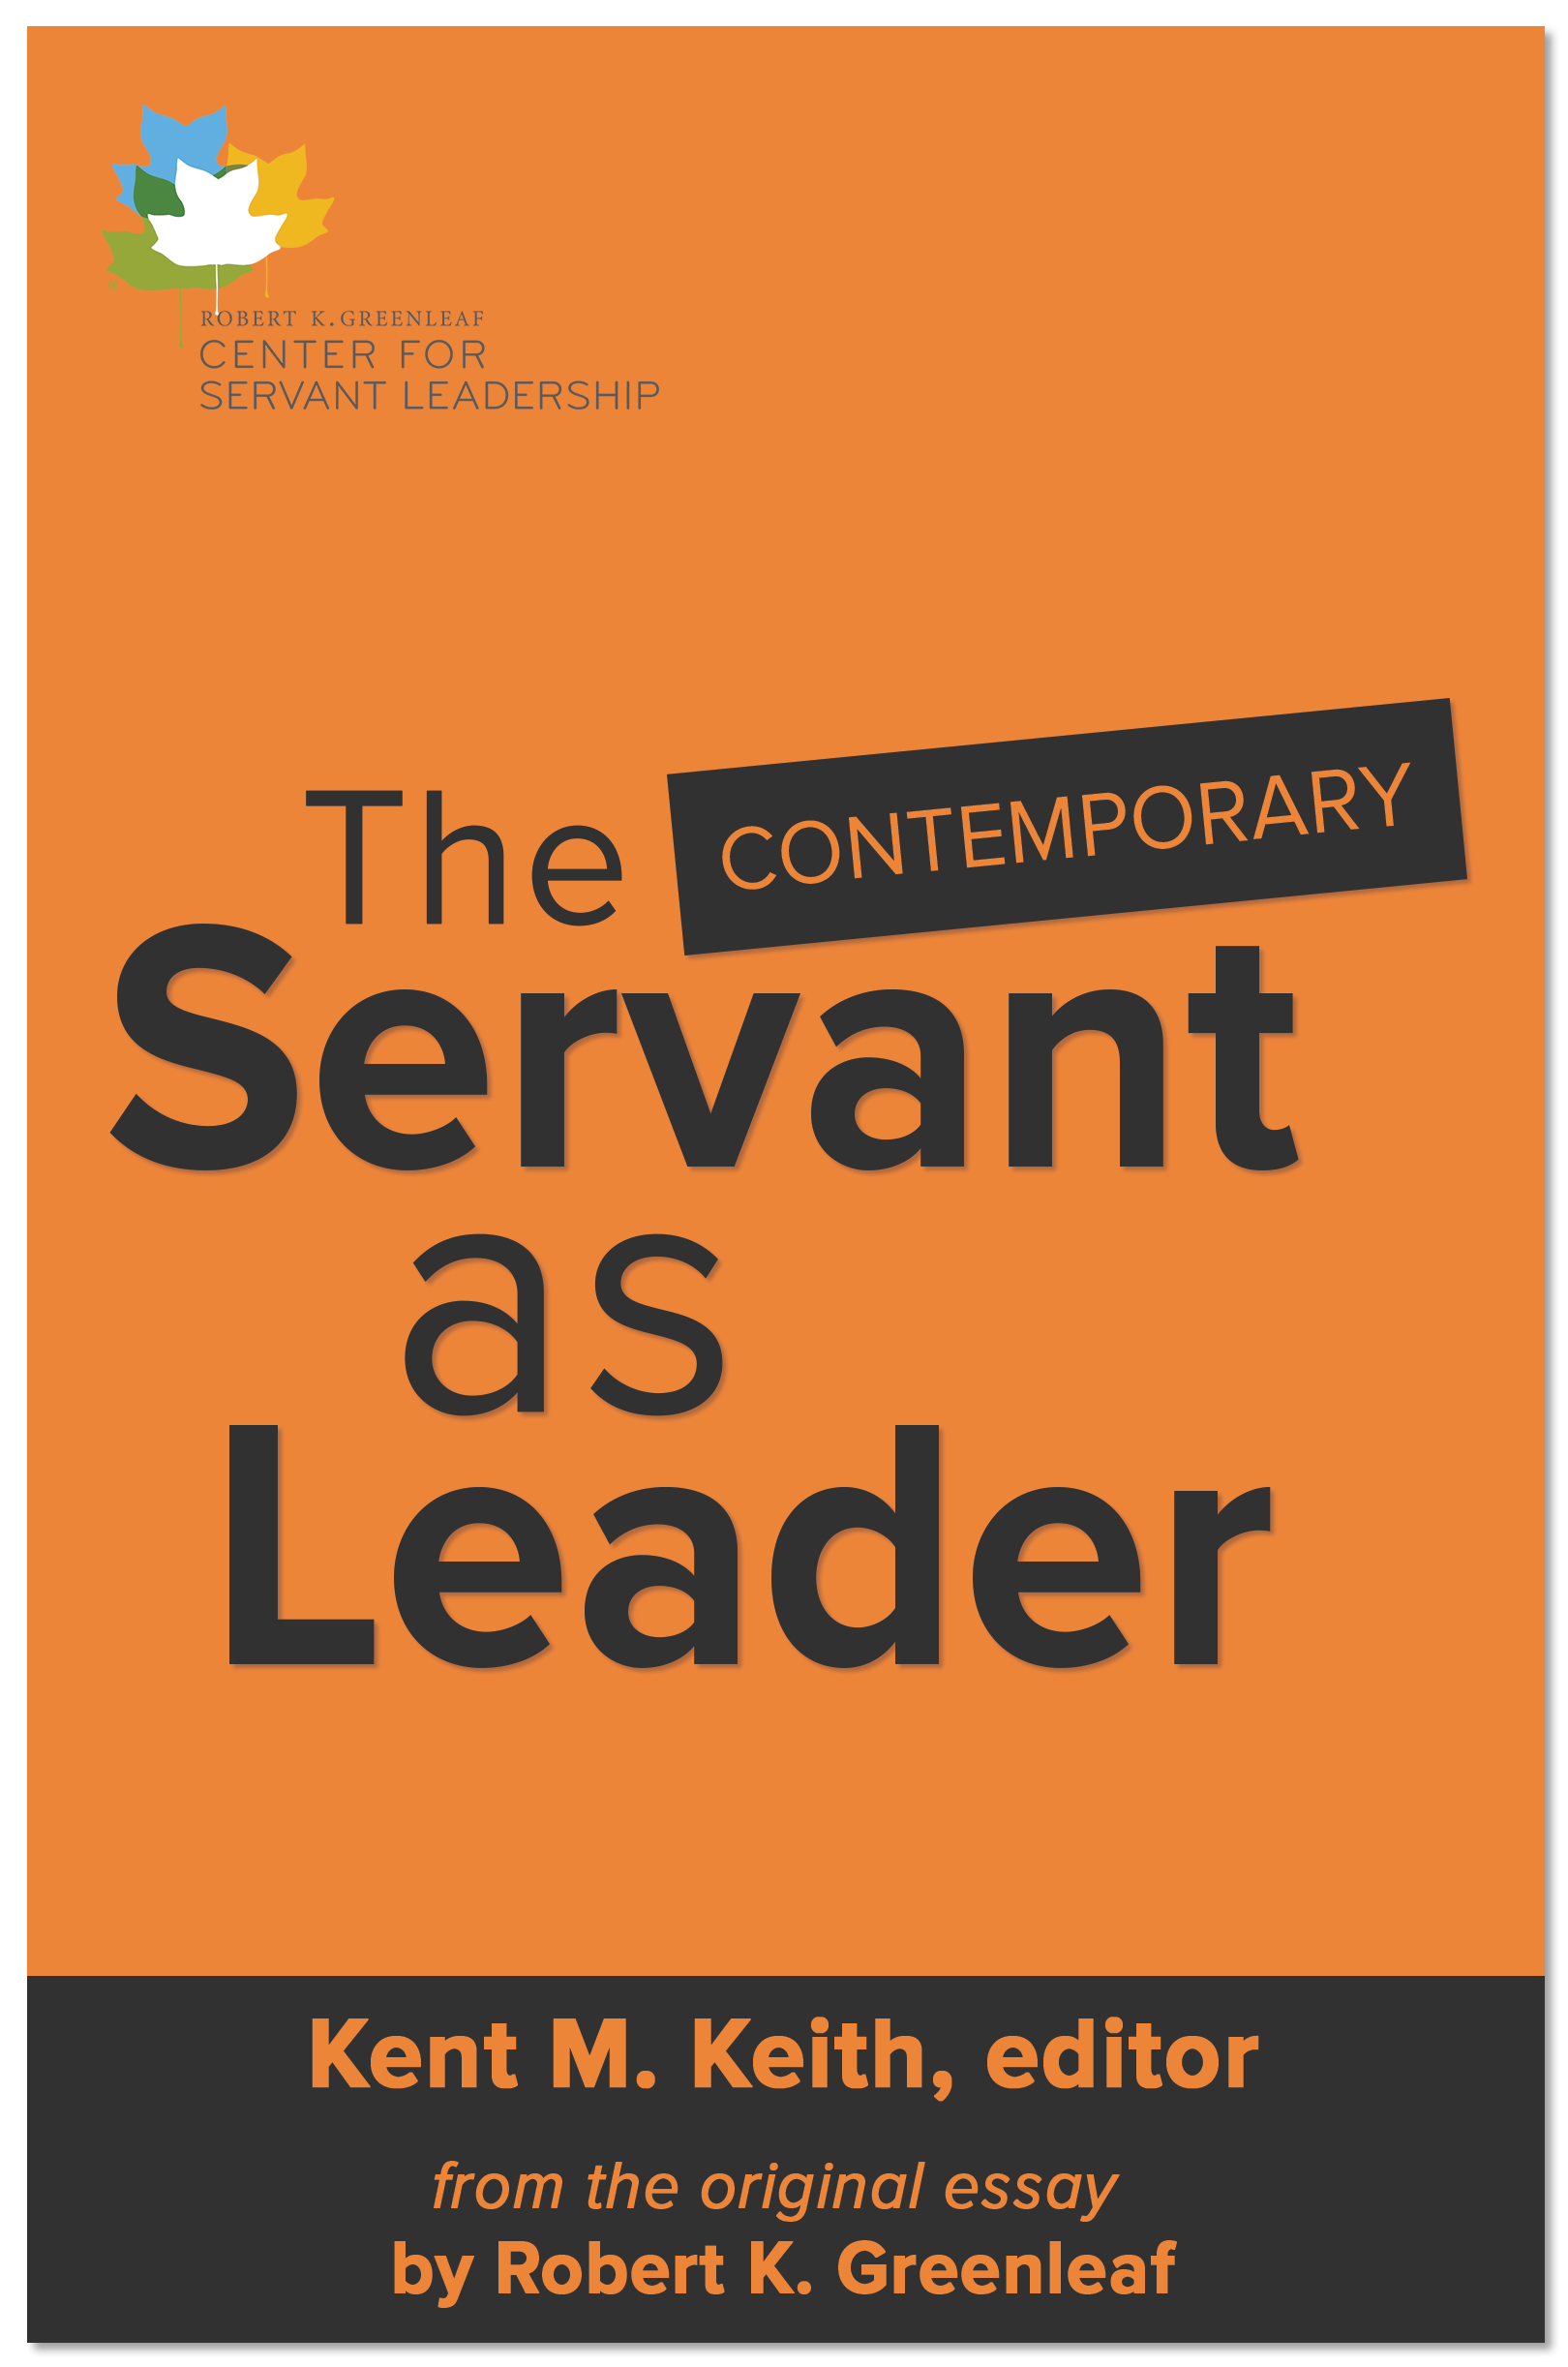 The Contemporary Servant as Leader E-book